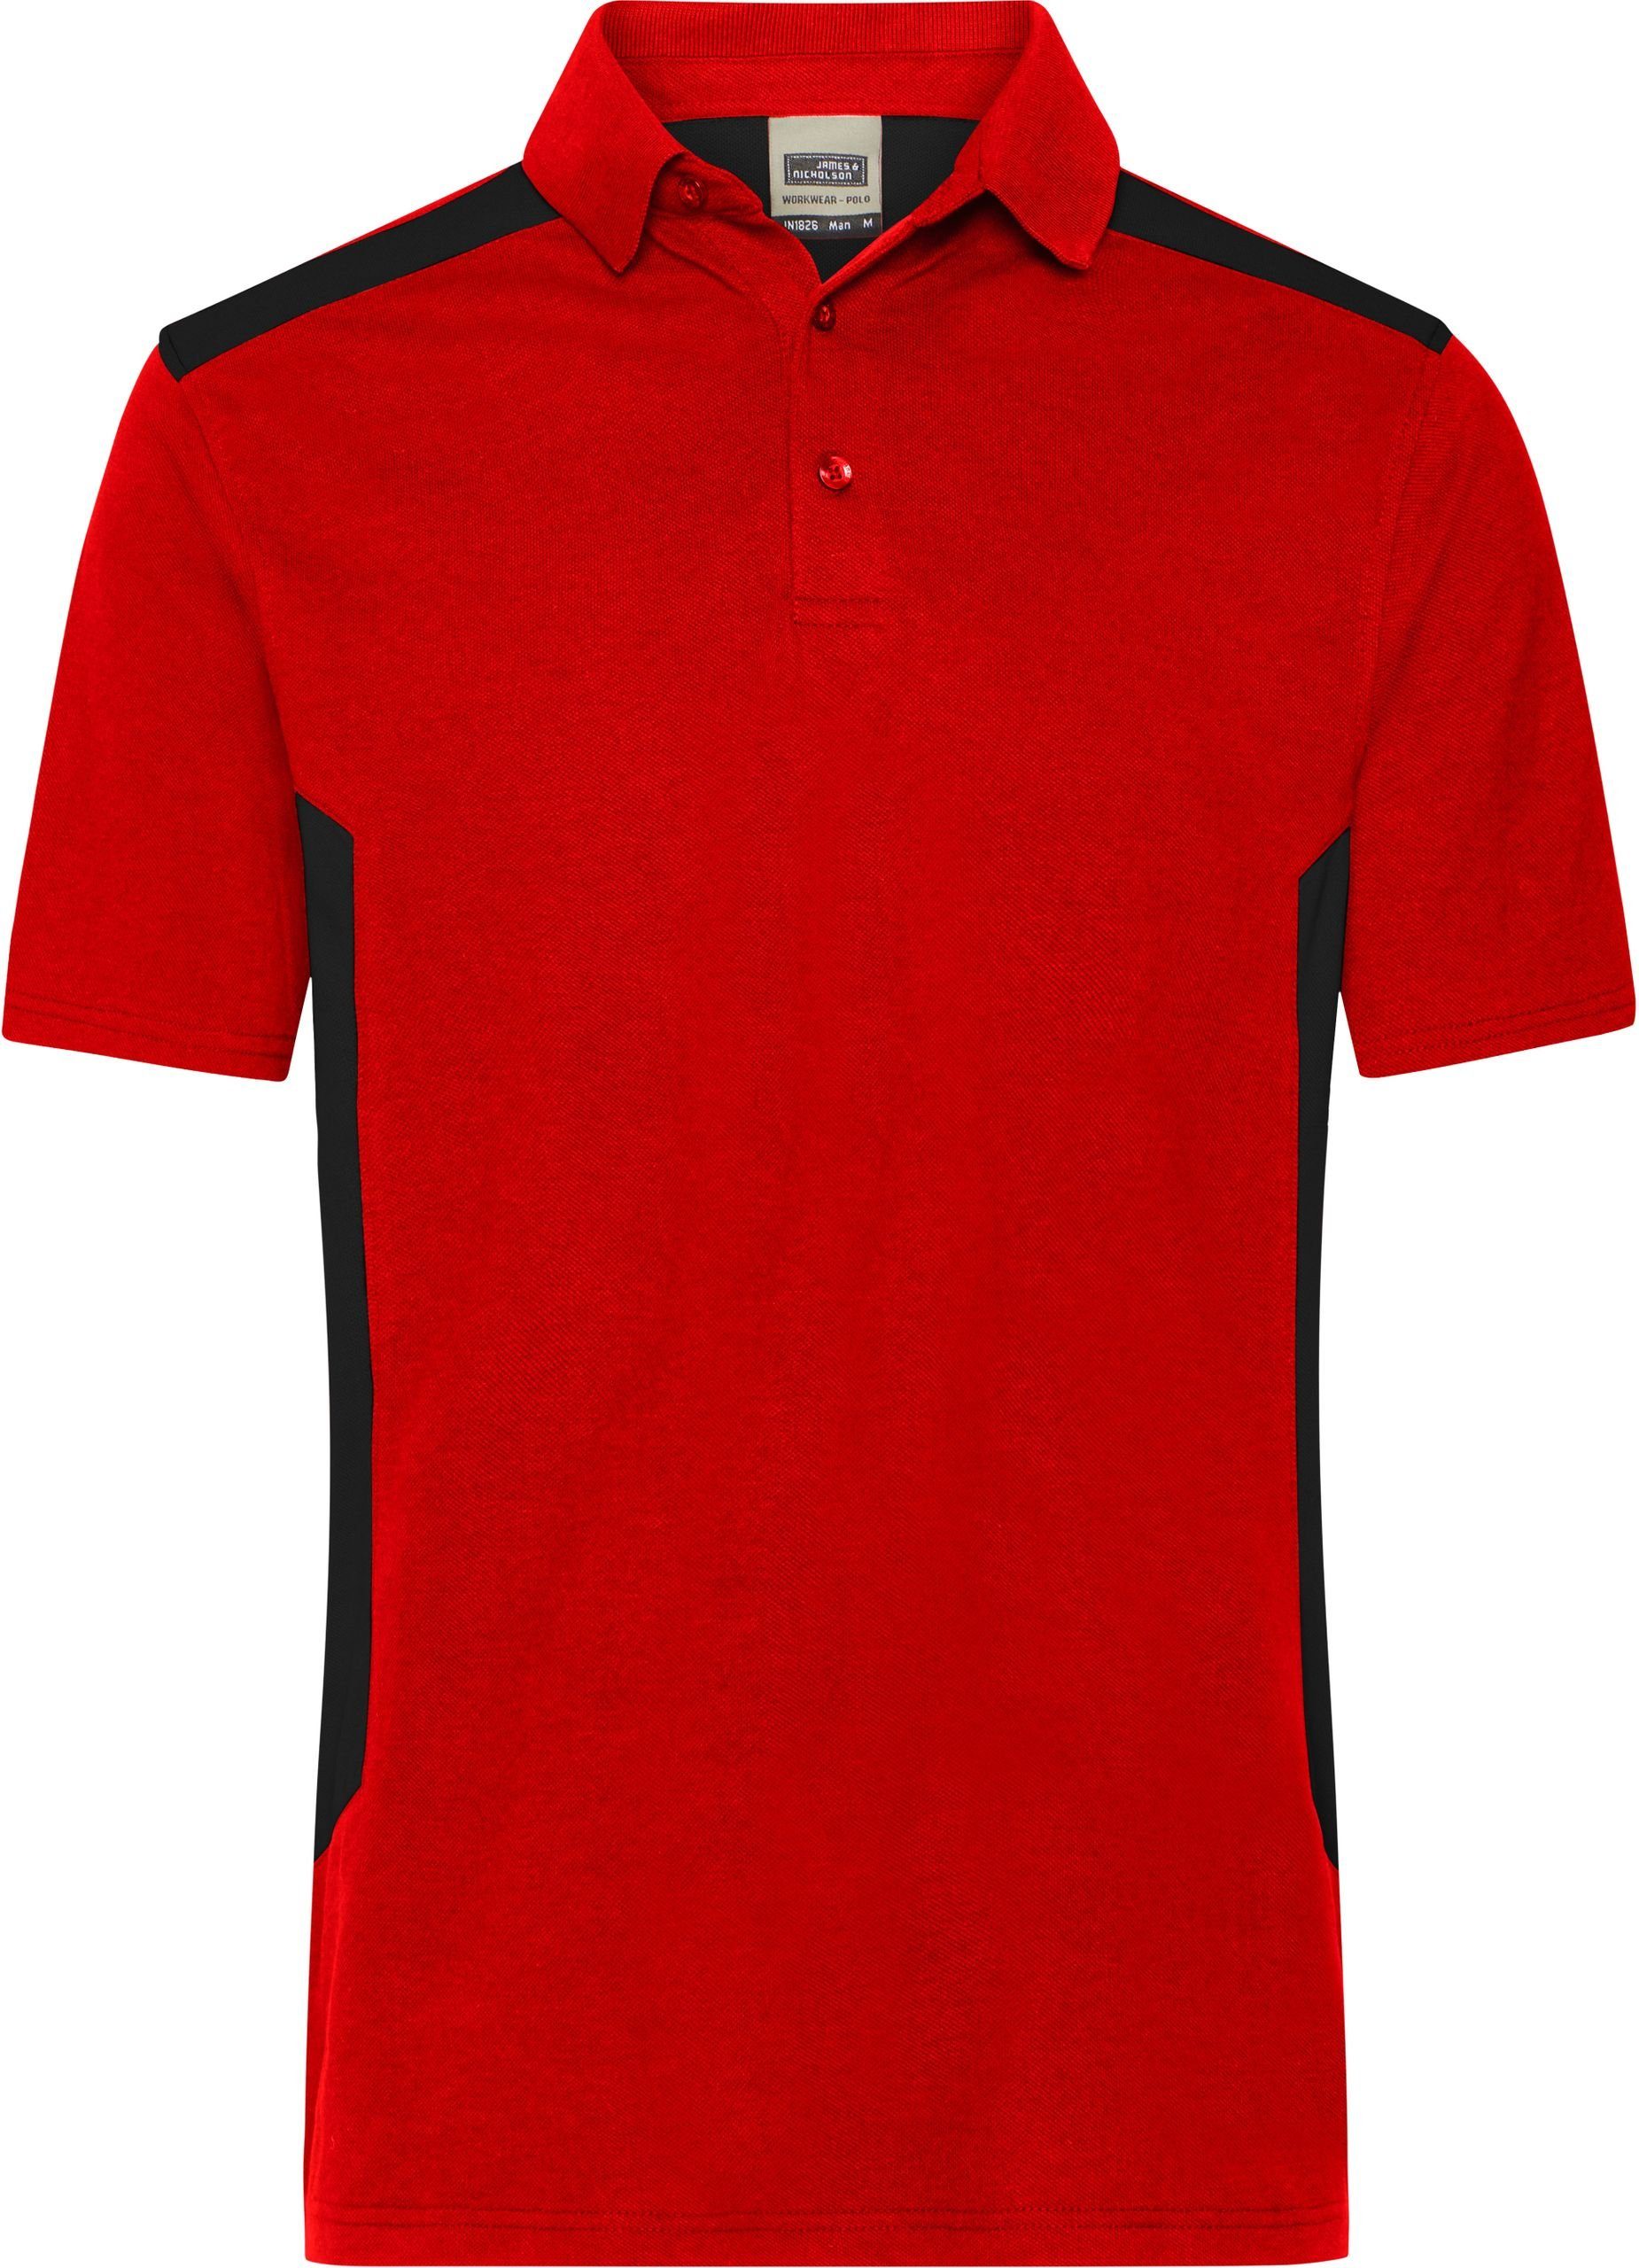 James & Nicholson Poloshirt Herren Workwear Polo - Strong RED/BLACK